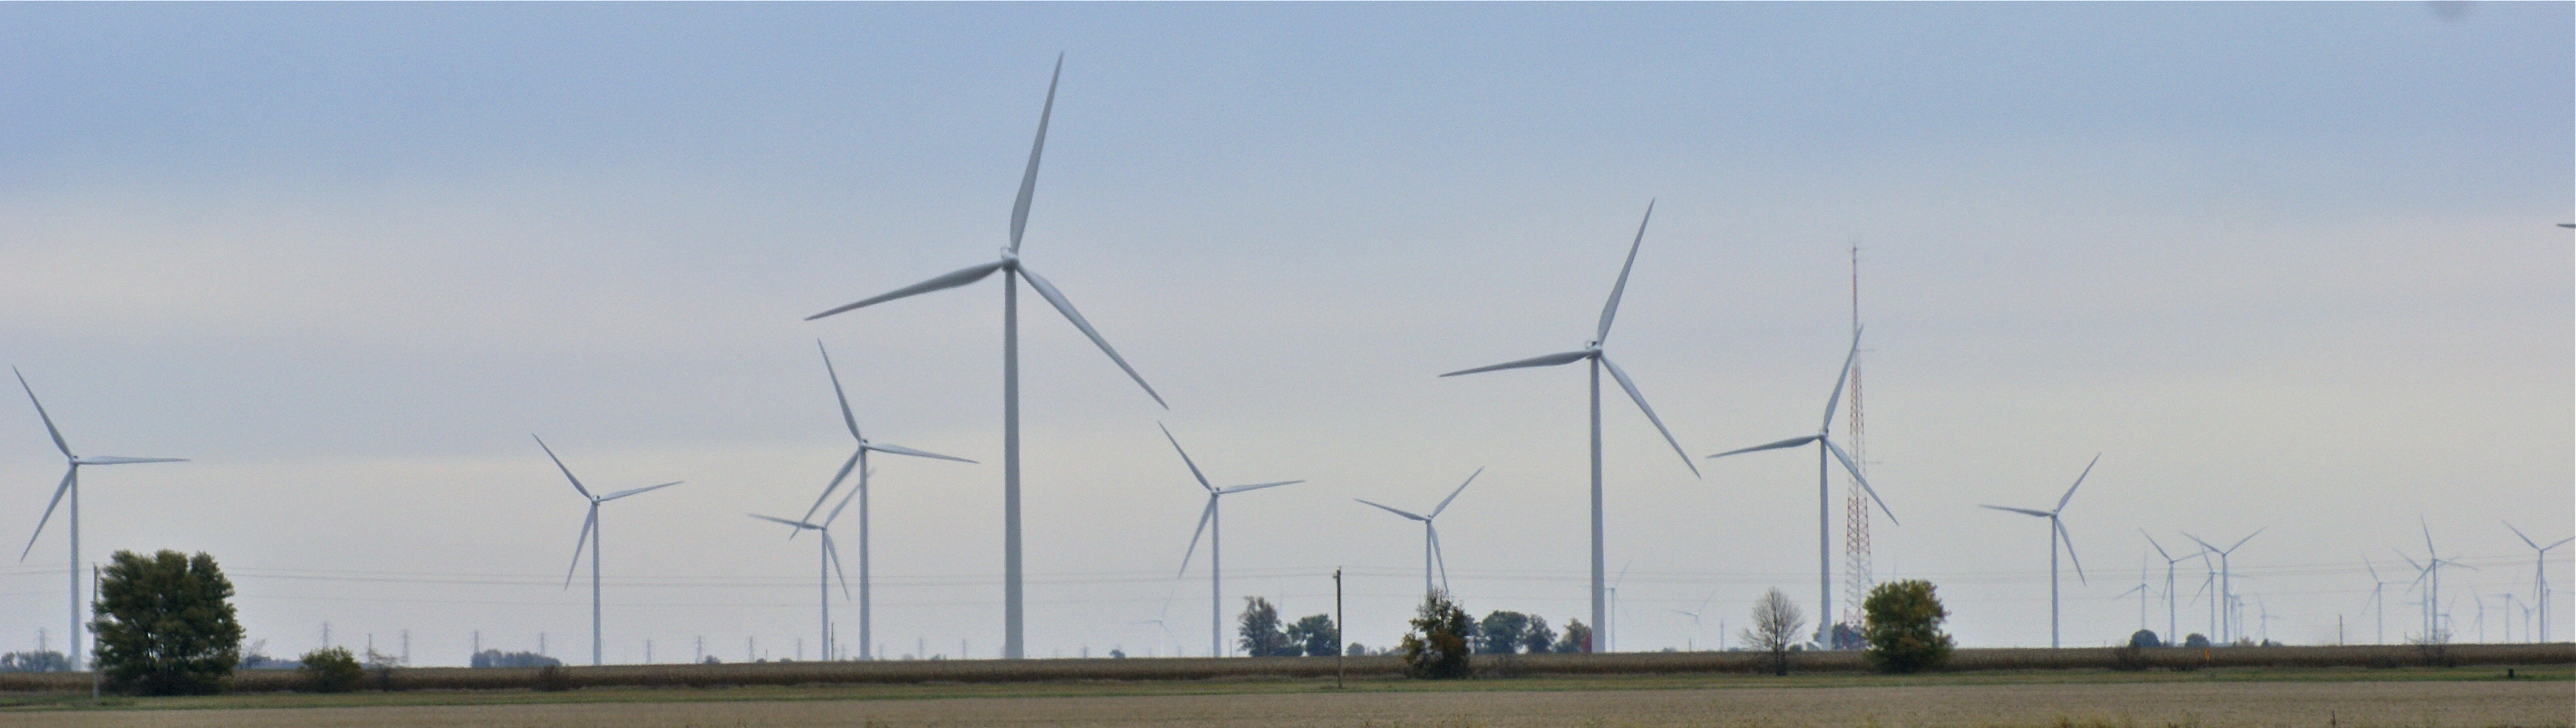 Wind farm, Ohio-Indiana state line, OH-30.